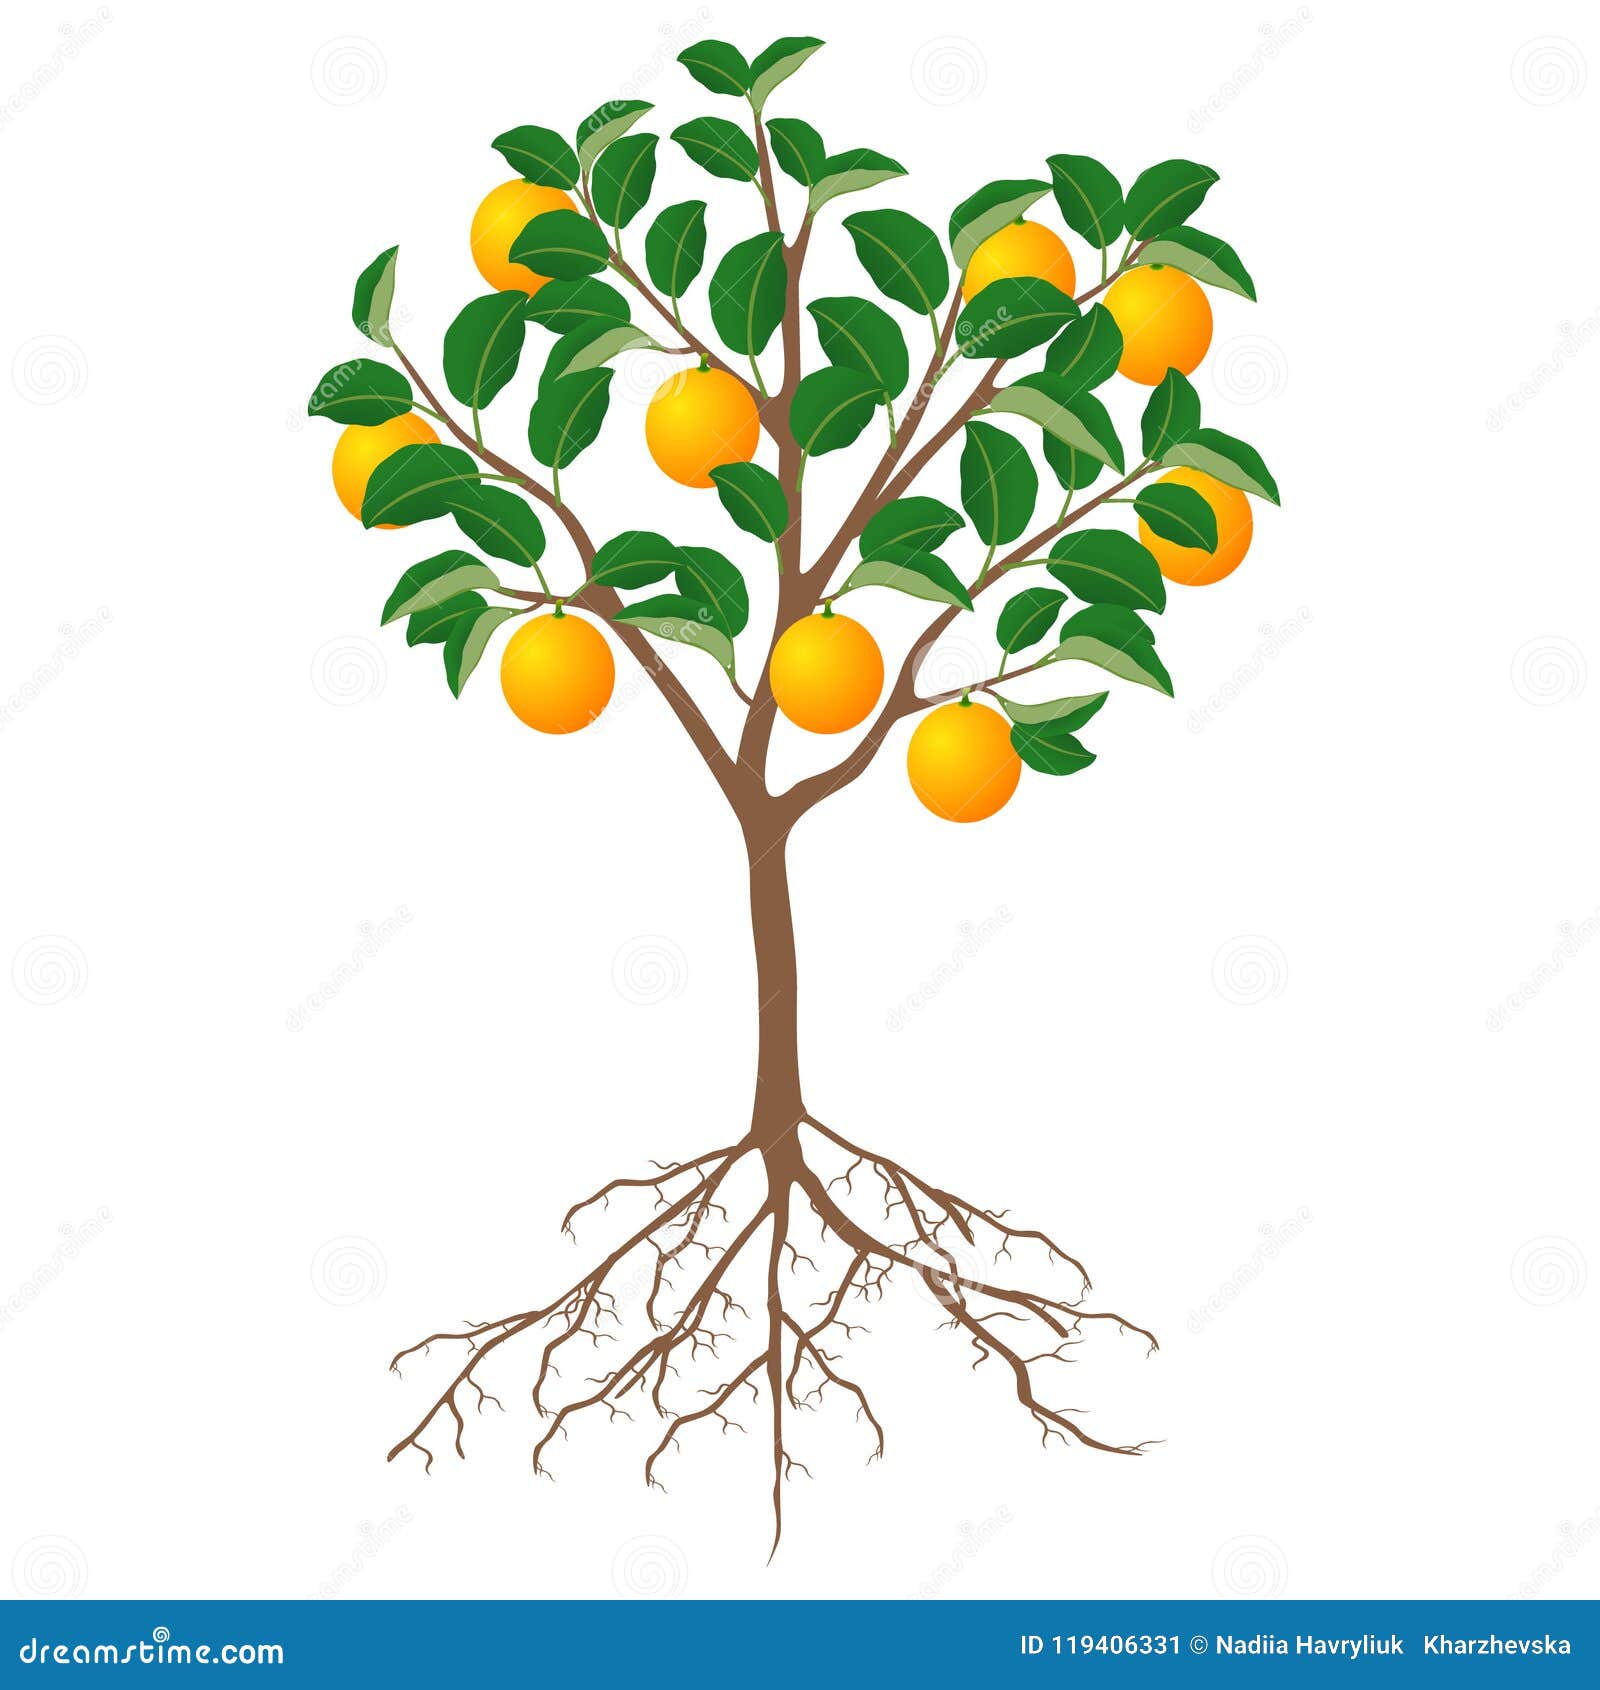 Osage-orange tree drawing